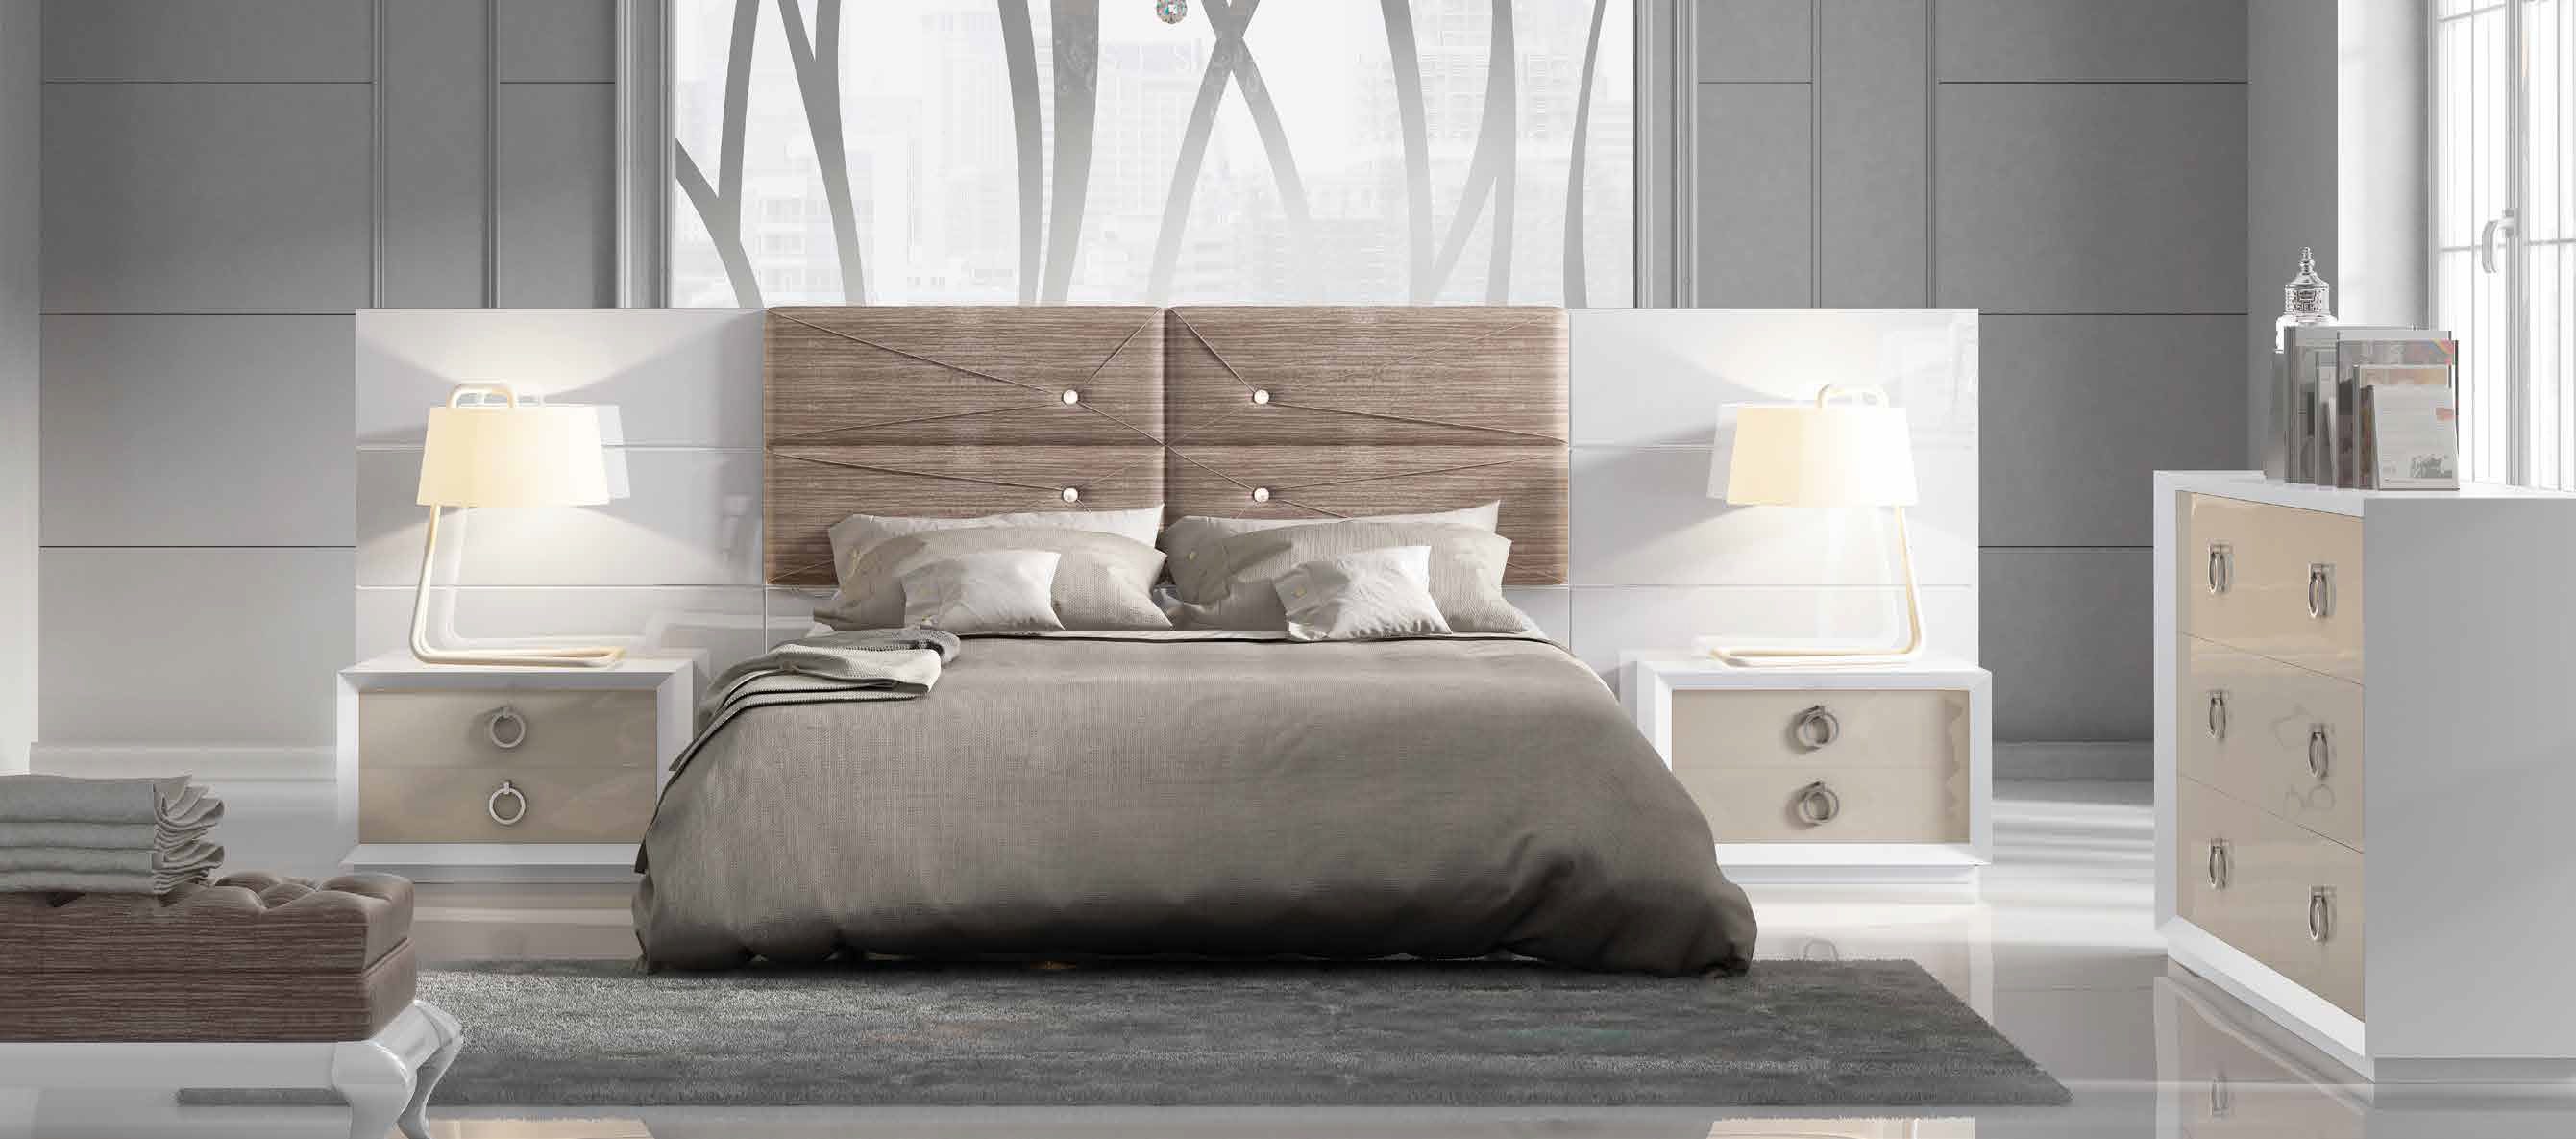 Brands Franco Furniture Bedrooms vol2, Spain DOR 75